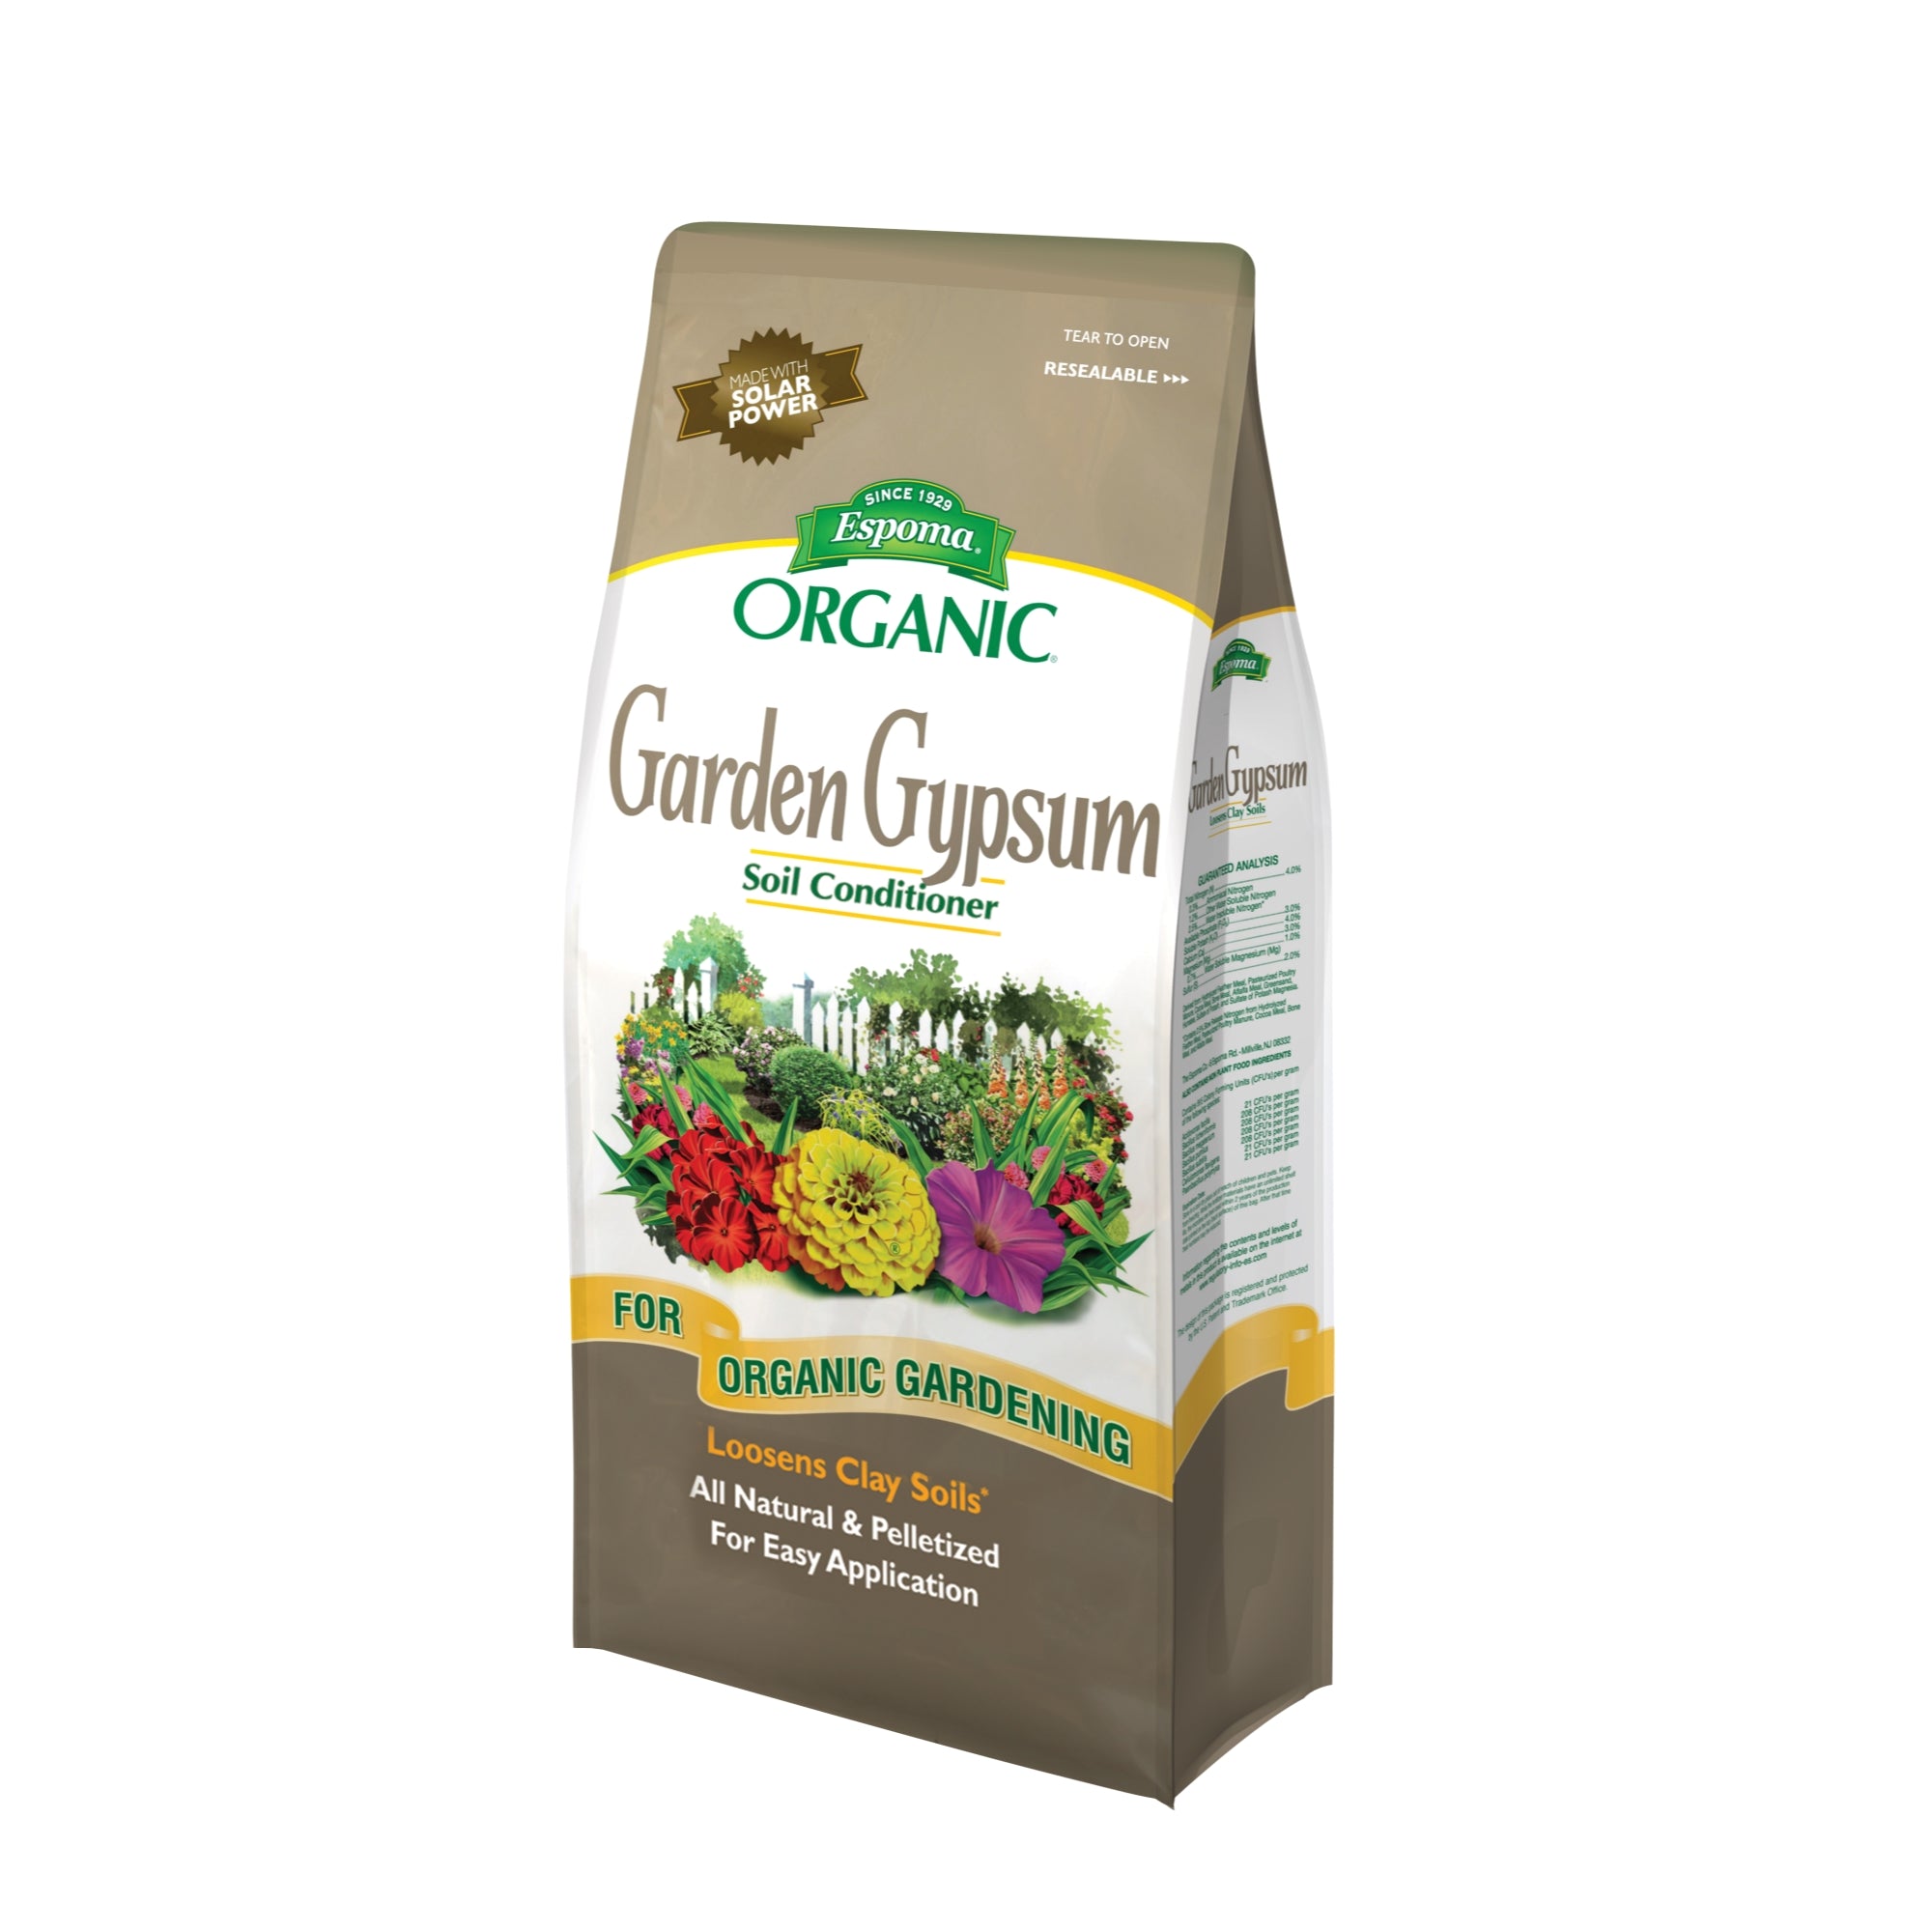 Espoma Organic Garden Gypsum Soil Conditioner for Organic Gardening, Loosens Clay Soils, Pelletized